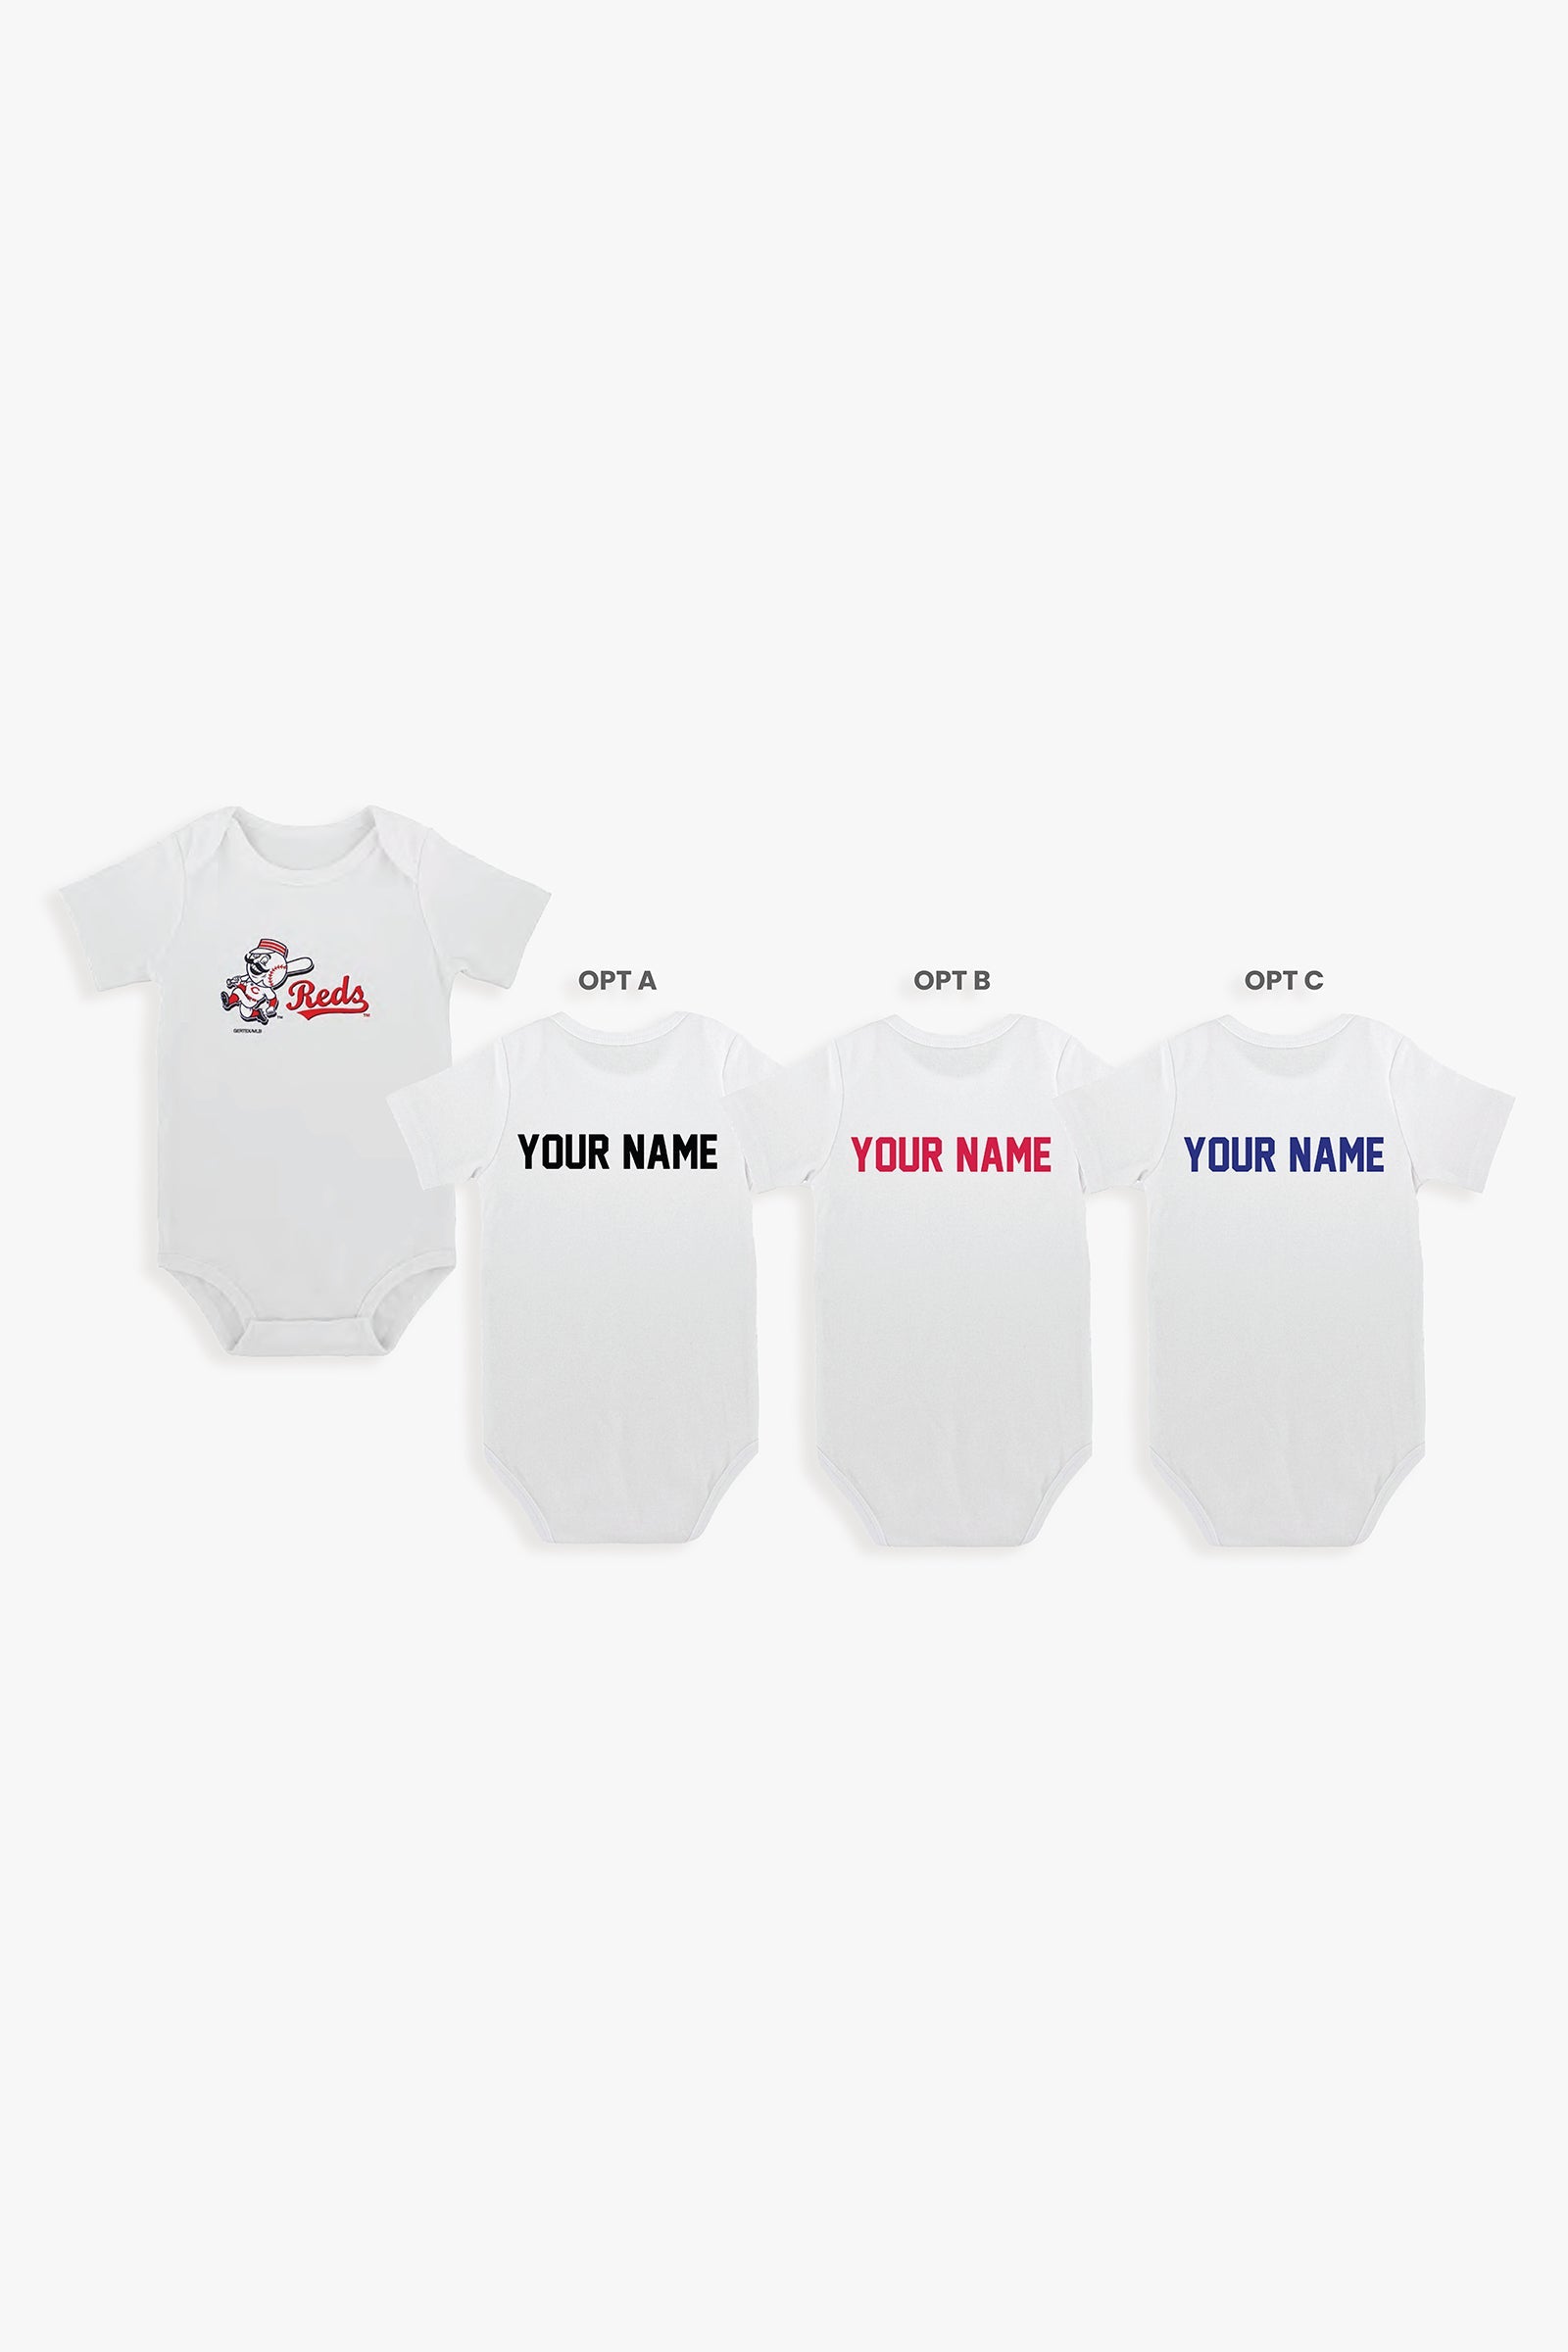 Gertex Customizable MLB Baby Bodysuit in White (3-6 Months)